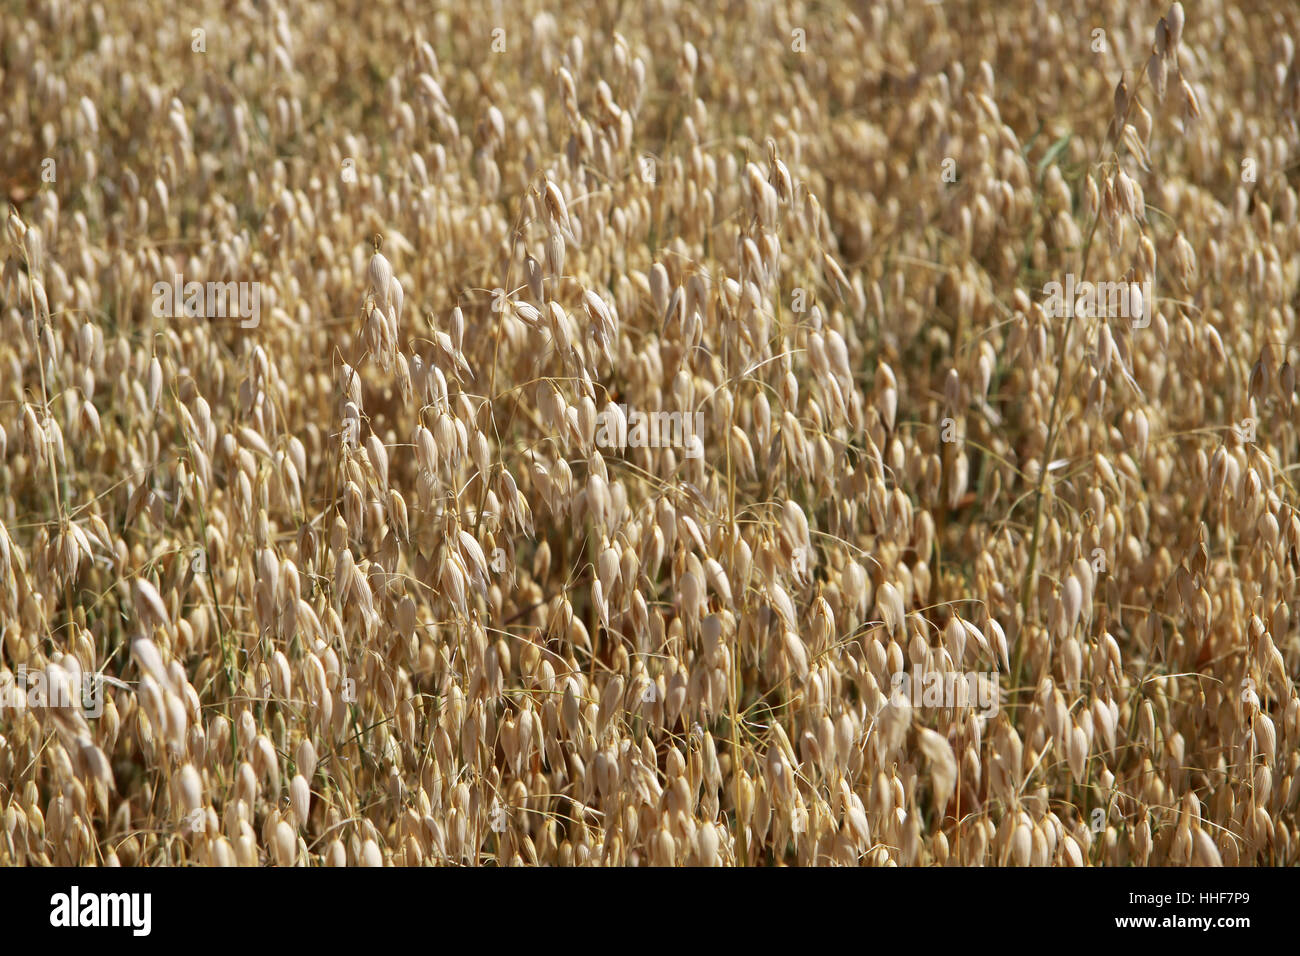 food, aliment, agriculture, farming, field, grain field, culture landscape, Stock Photo